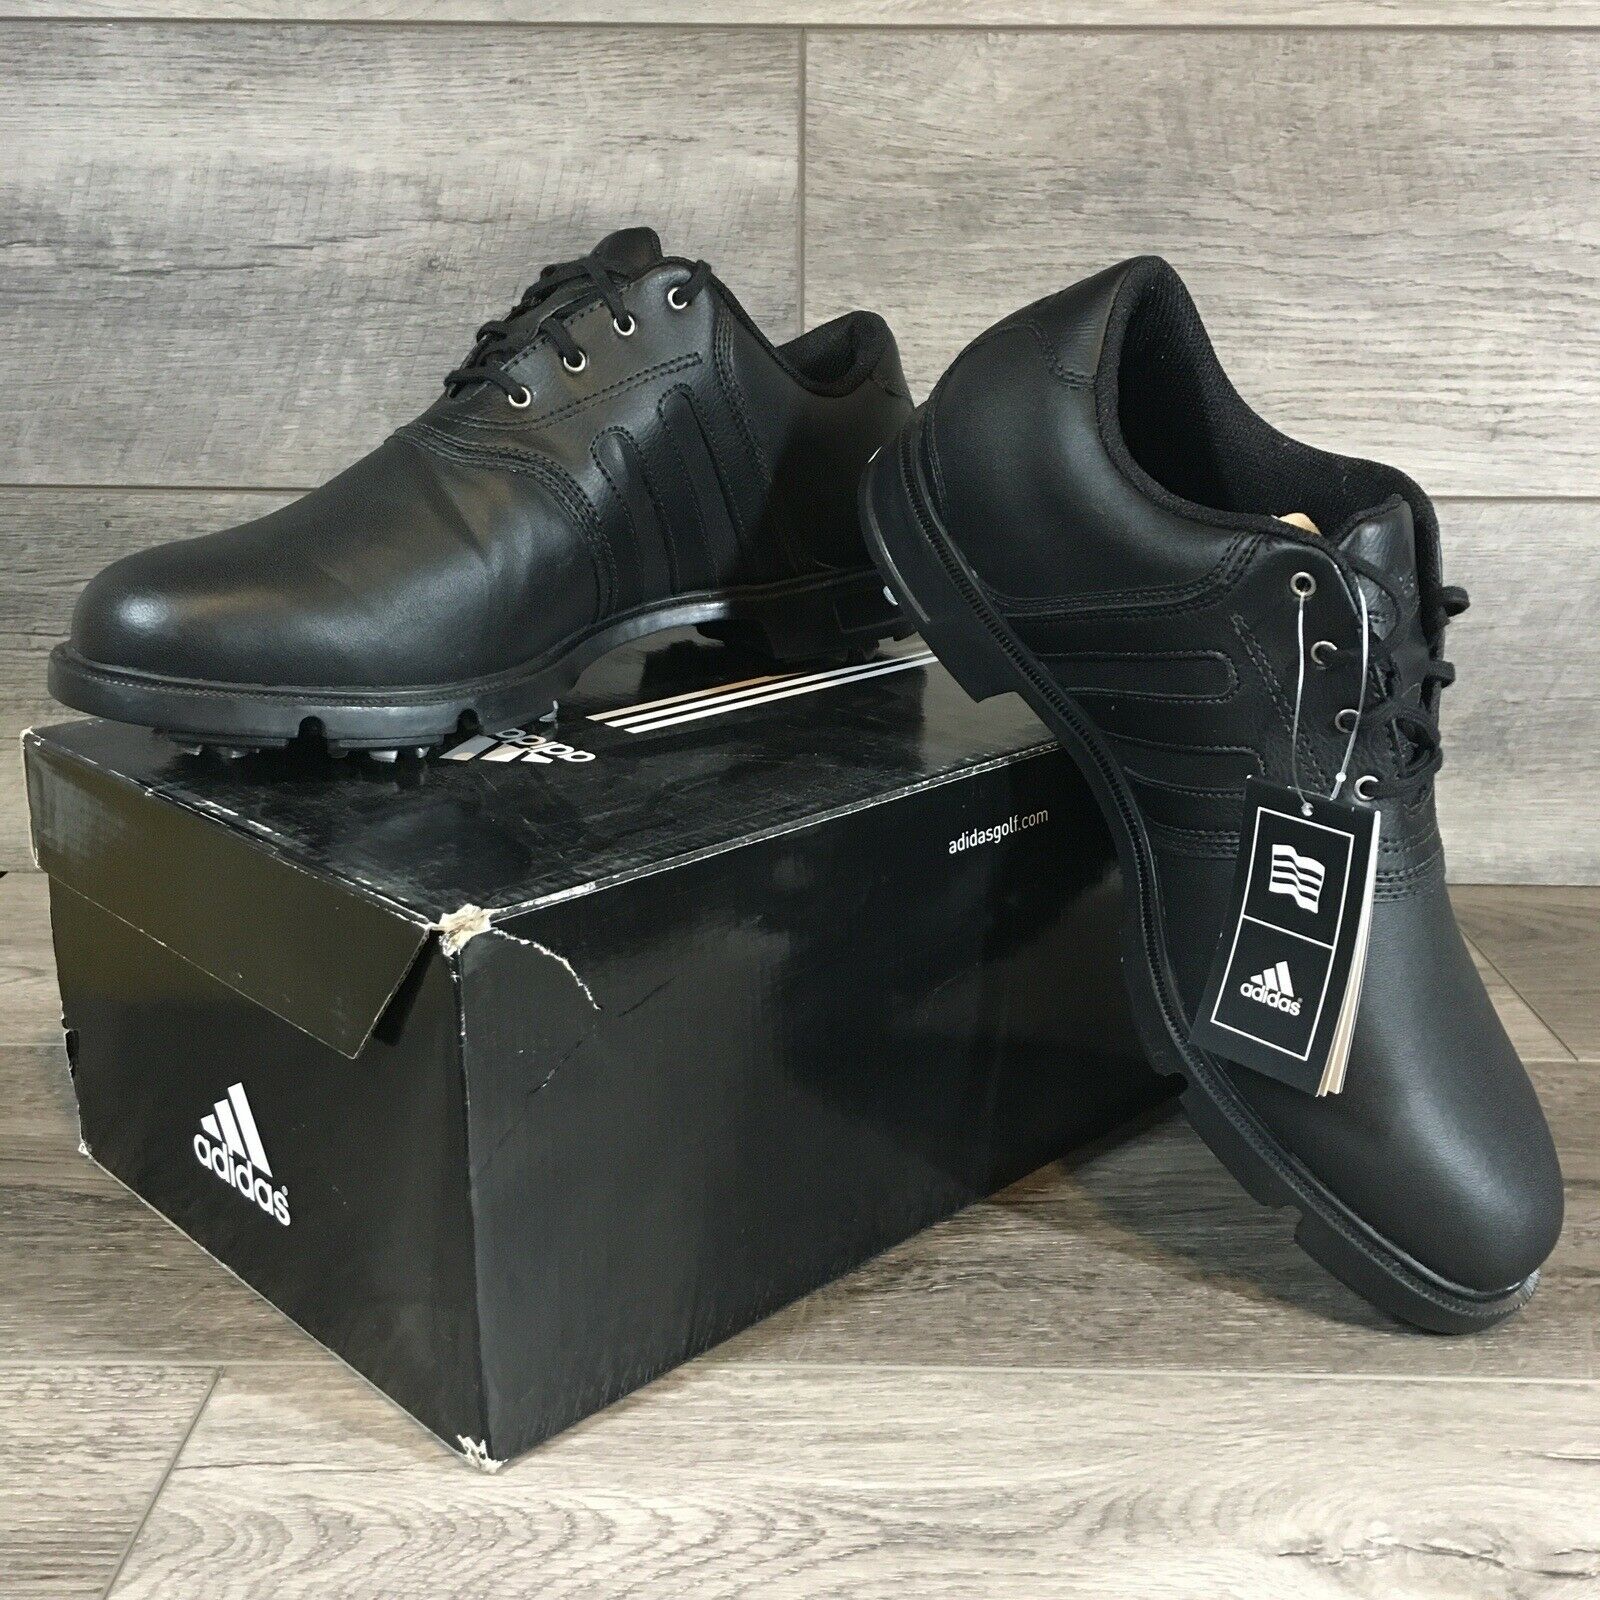 Adidas Adiwear SL Z Traxion Golf Shoes Cleats Mens 8.5 Black NEW In Box